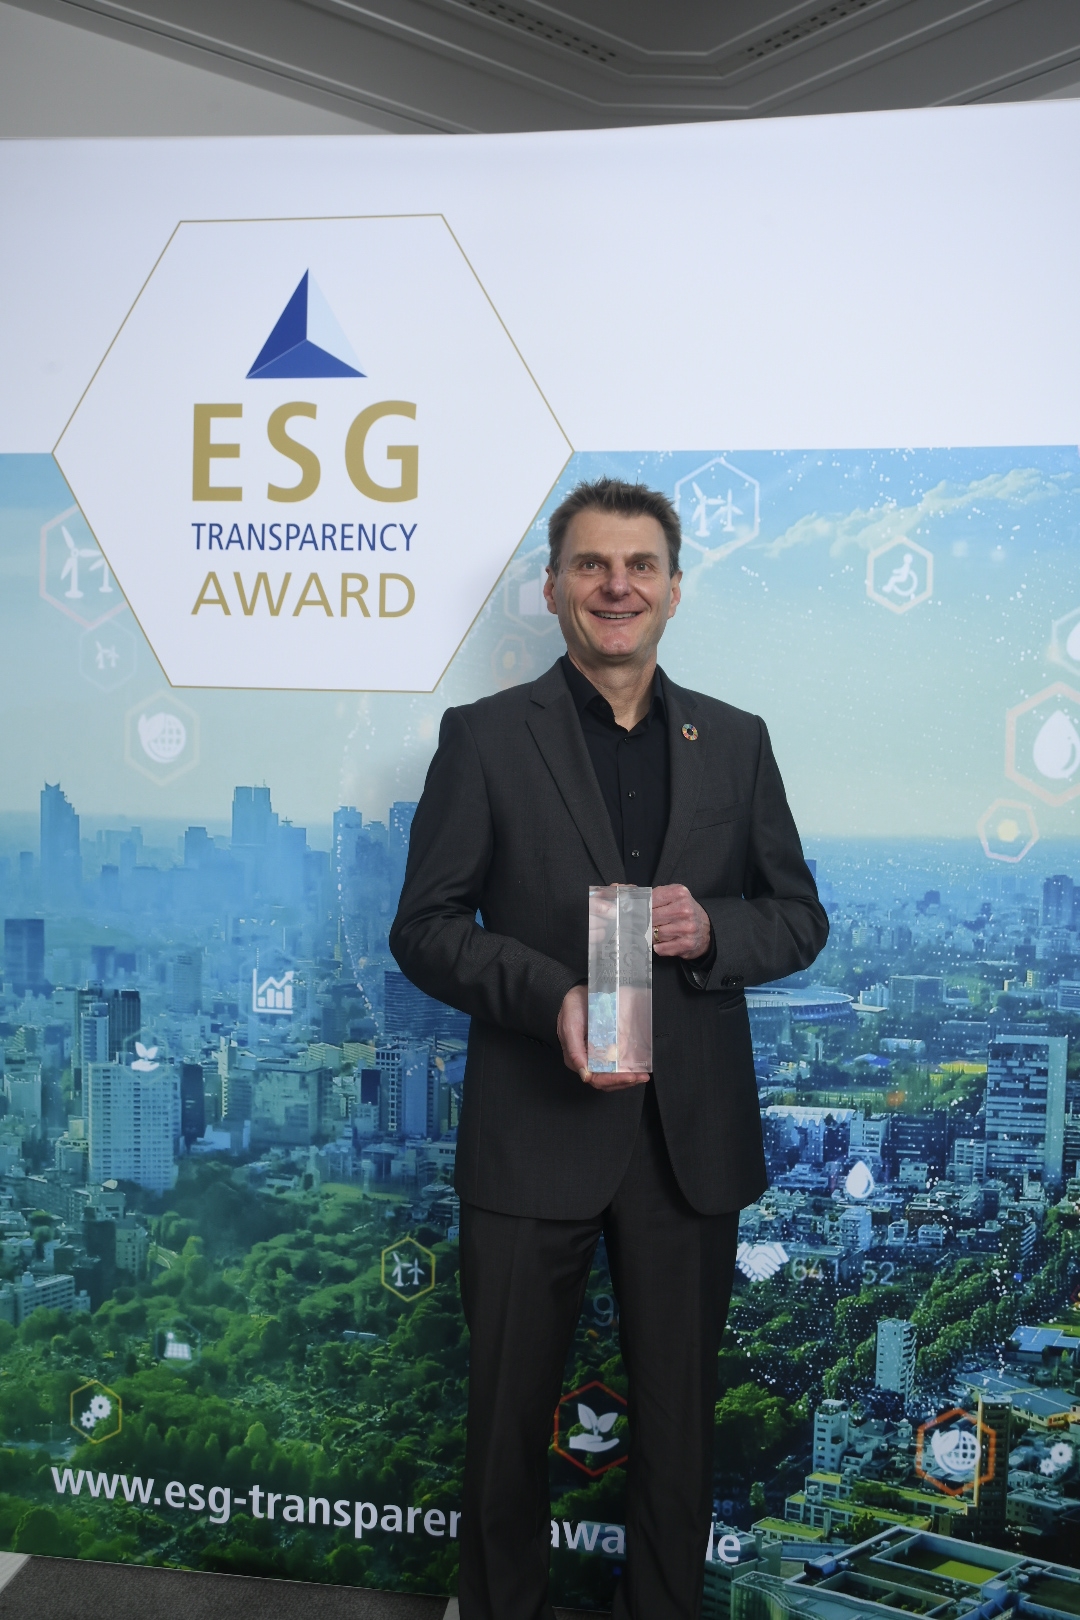 KLM_Image_ESG_Award_MH